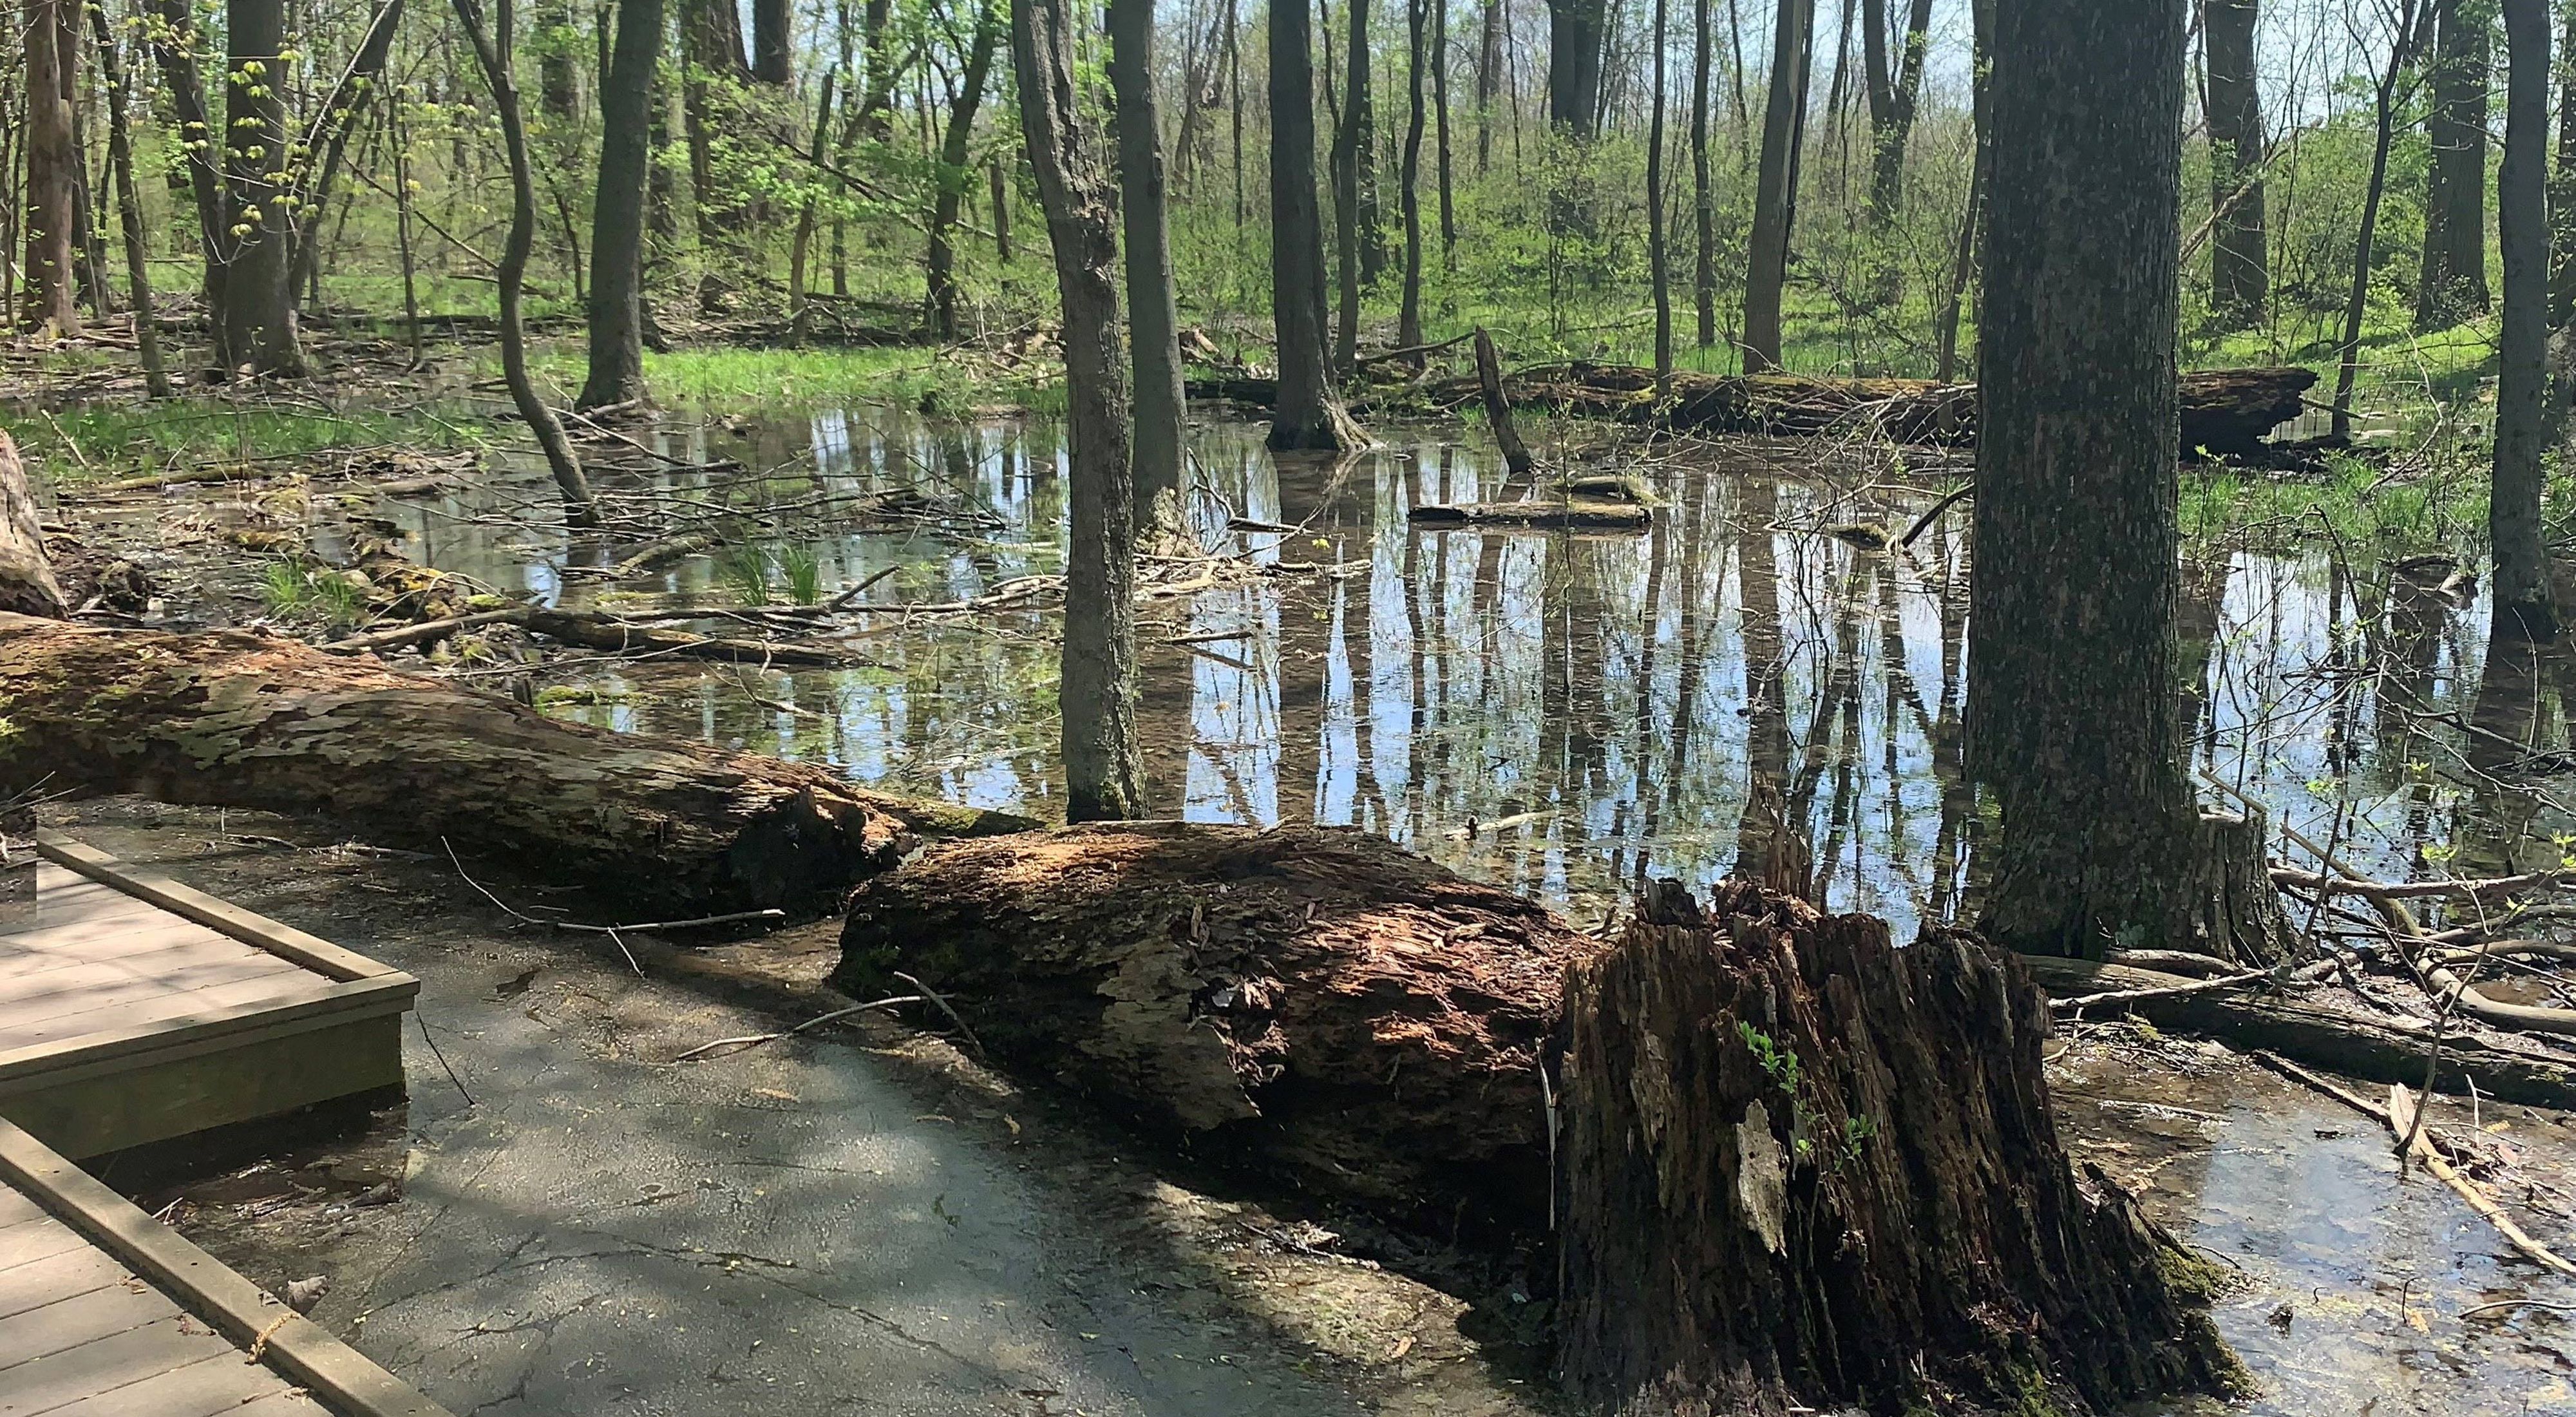 Wooden boardwalk runs next to fallen tree in shallow wetland.